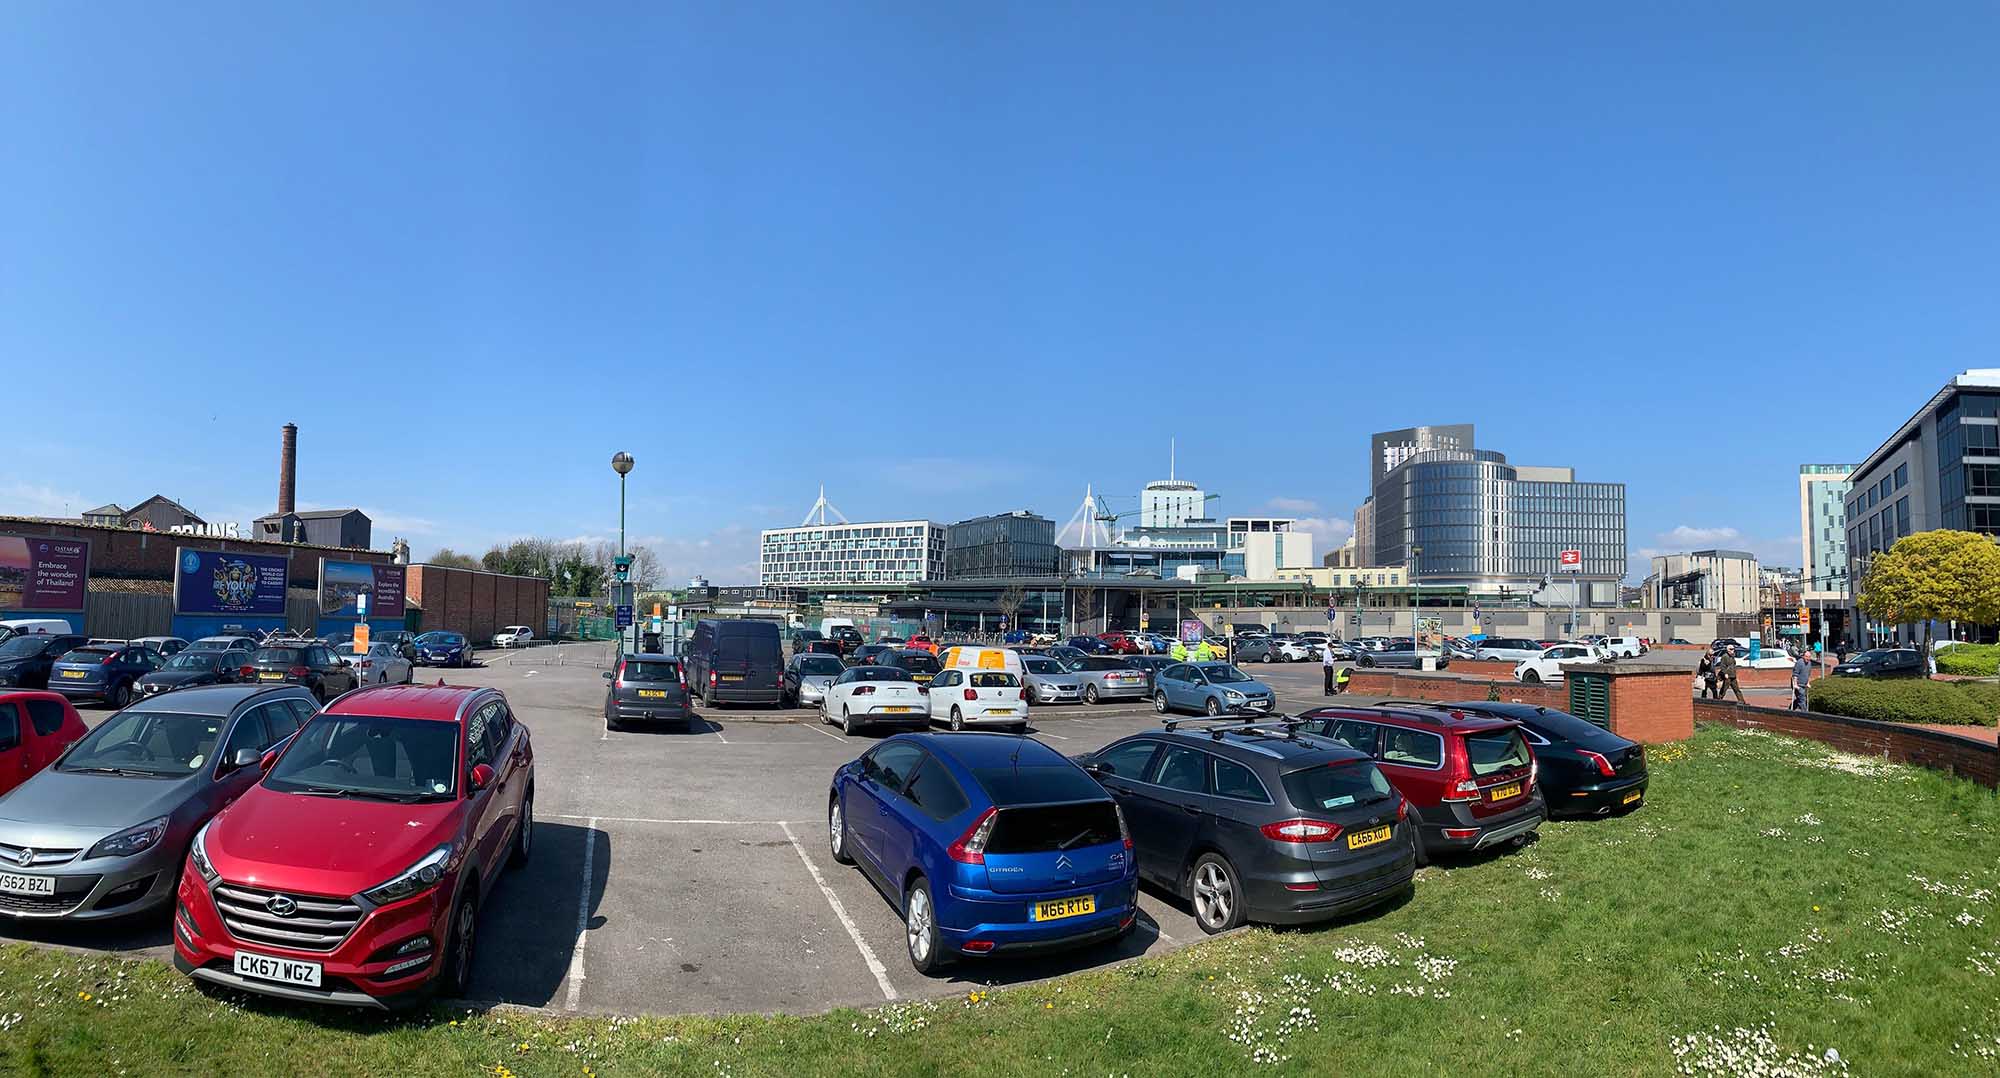 Cardiff Interchange